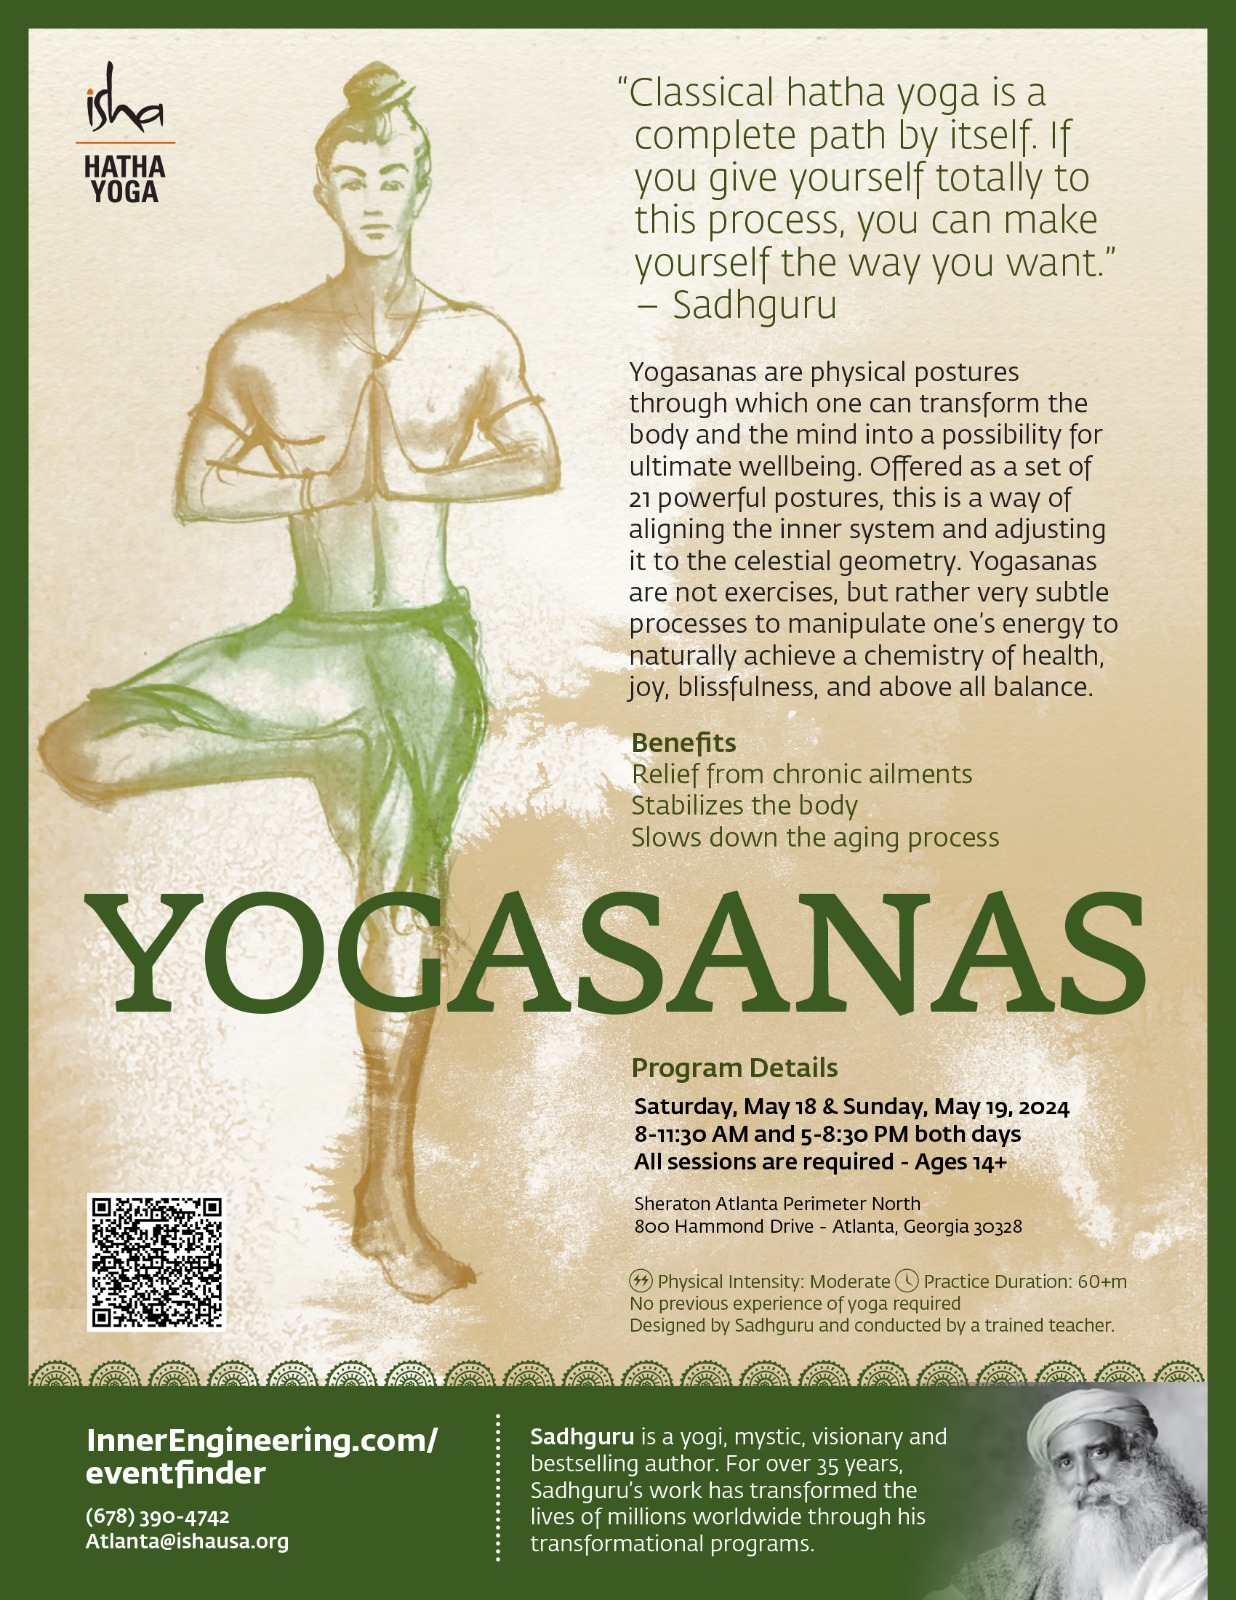 Classical Hatha Yoga Program - Yogasanas in Atlanta!